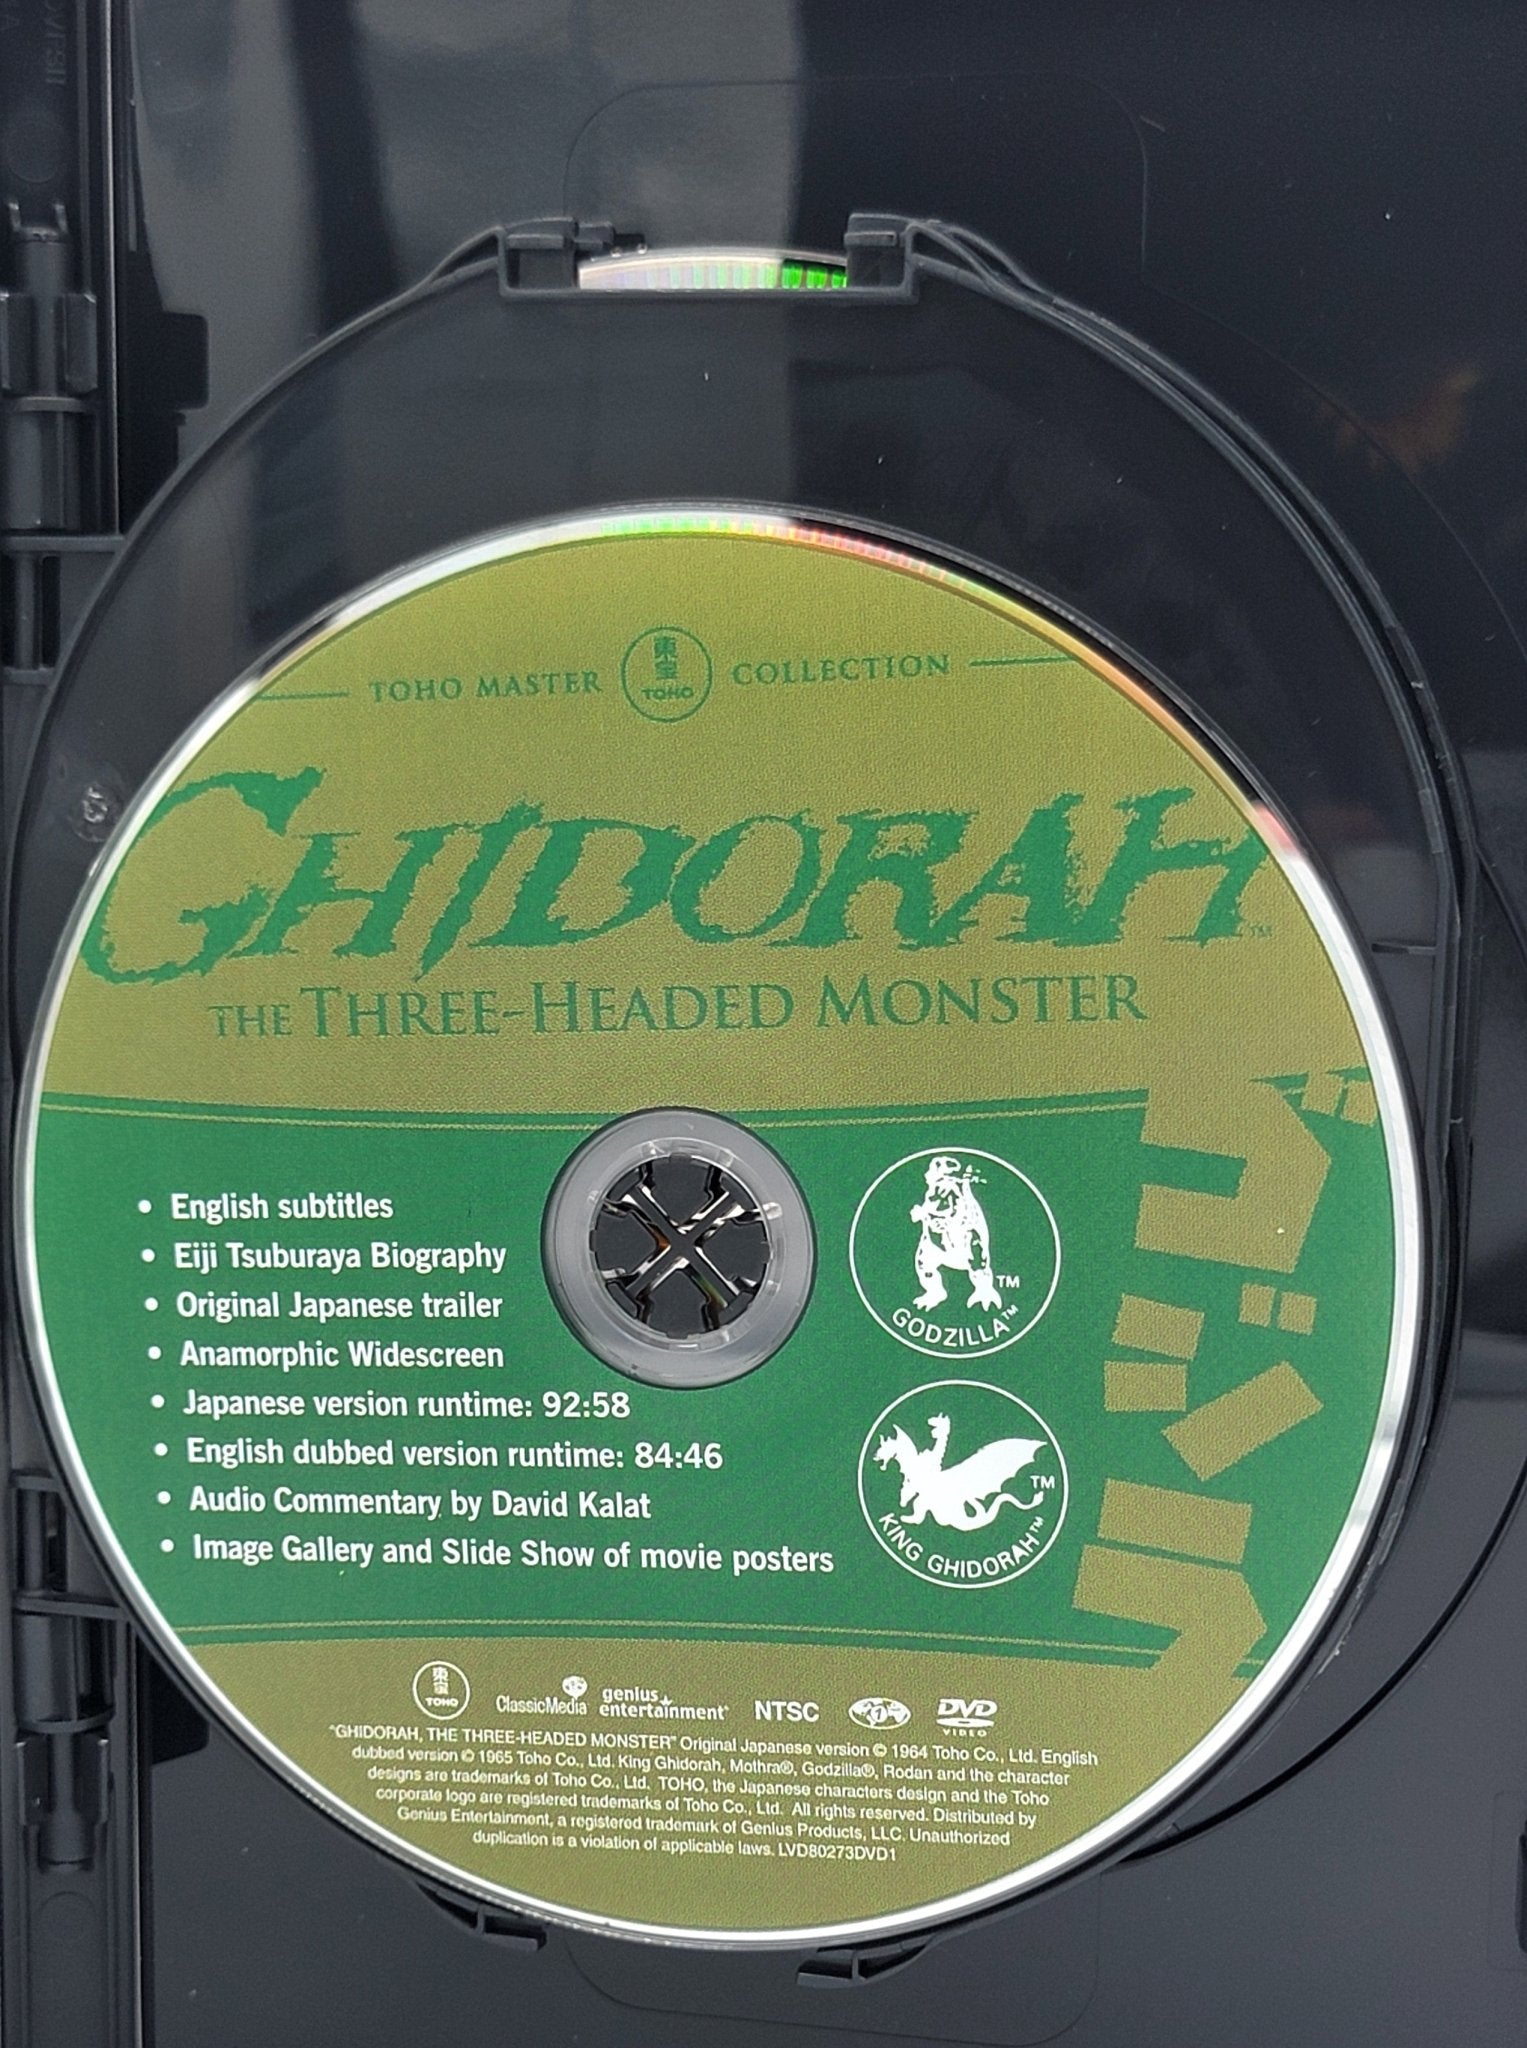 Classic Media - The Godzilla Collection Volume 1 & Volume 2 - 2011 | DVD | 8 Disc Set - Includes the Original Uncut Godzilla - DVD - Steady Bunny Shop